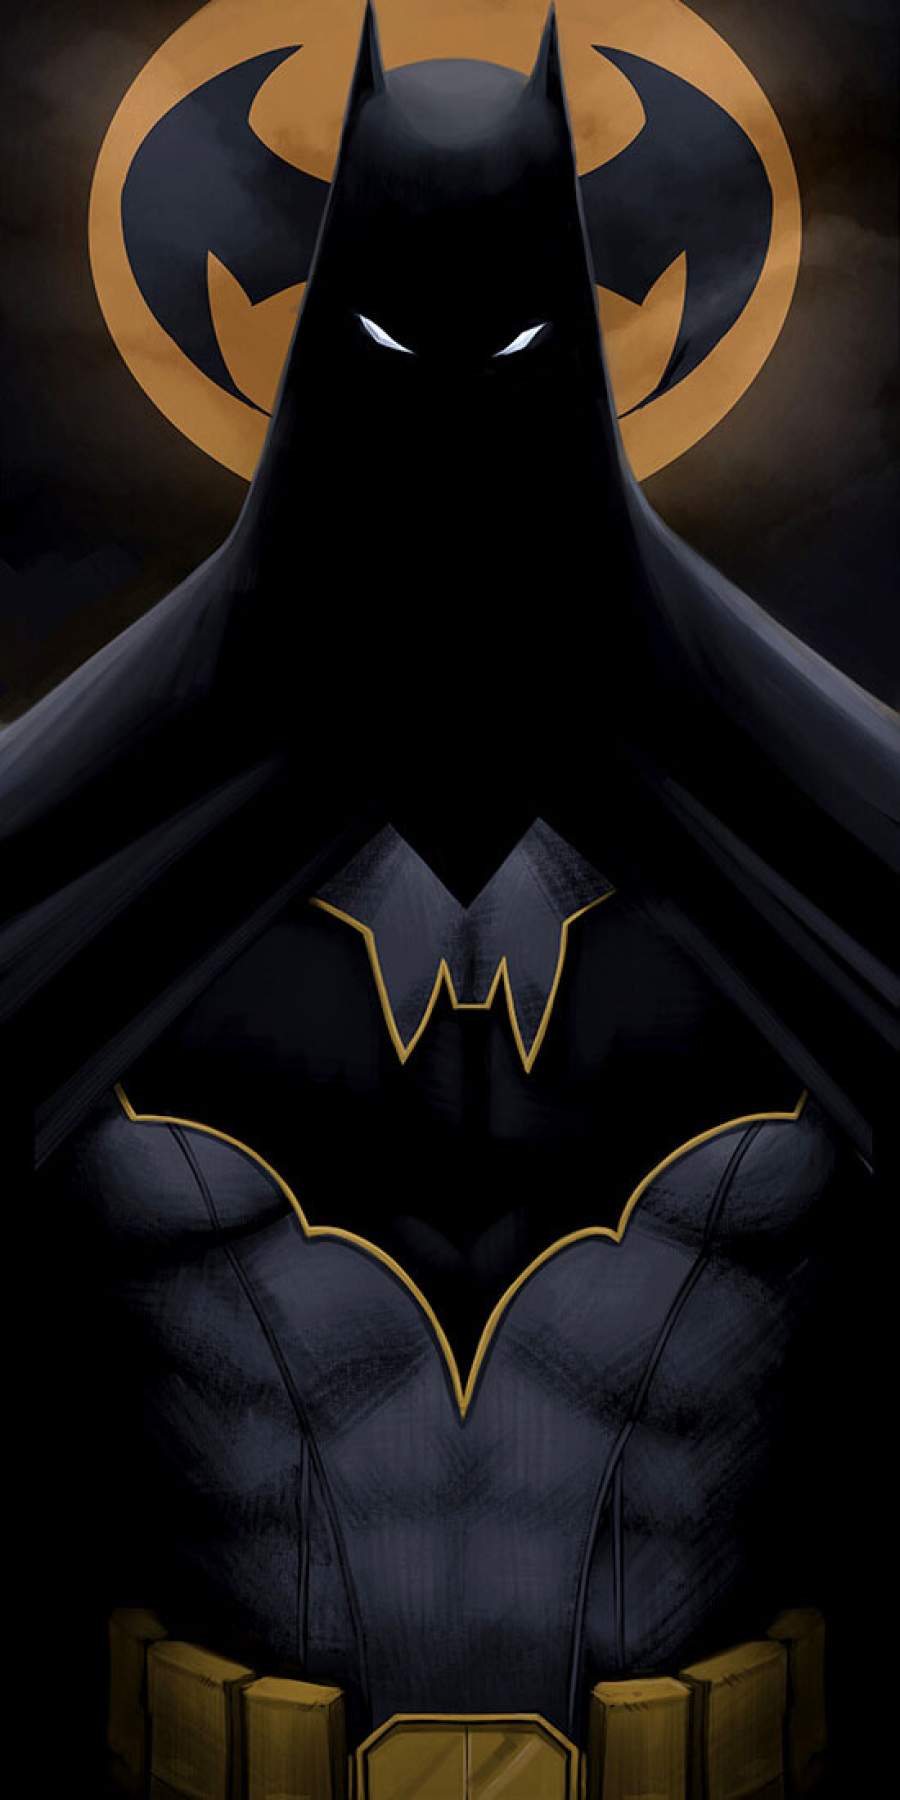 Batman Comic IPhone Wallpaper - IPhone Wallpapers : iPhone Wallpapers